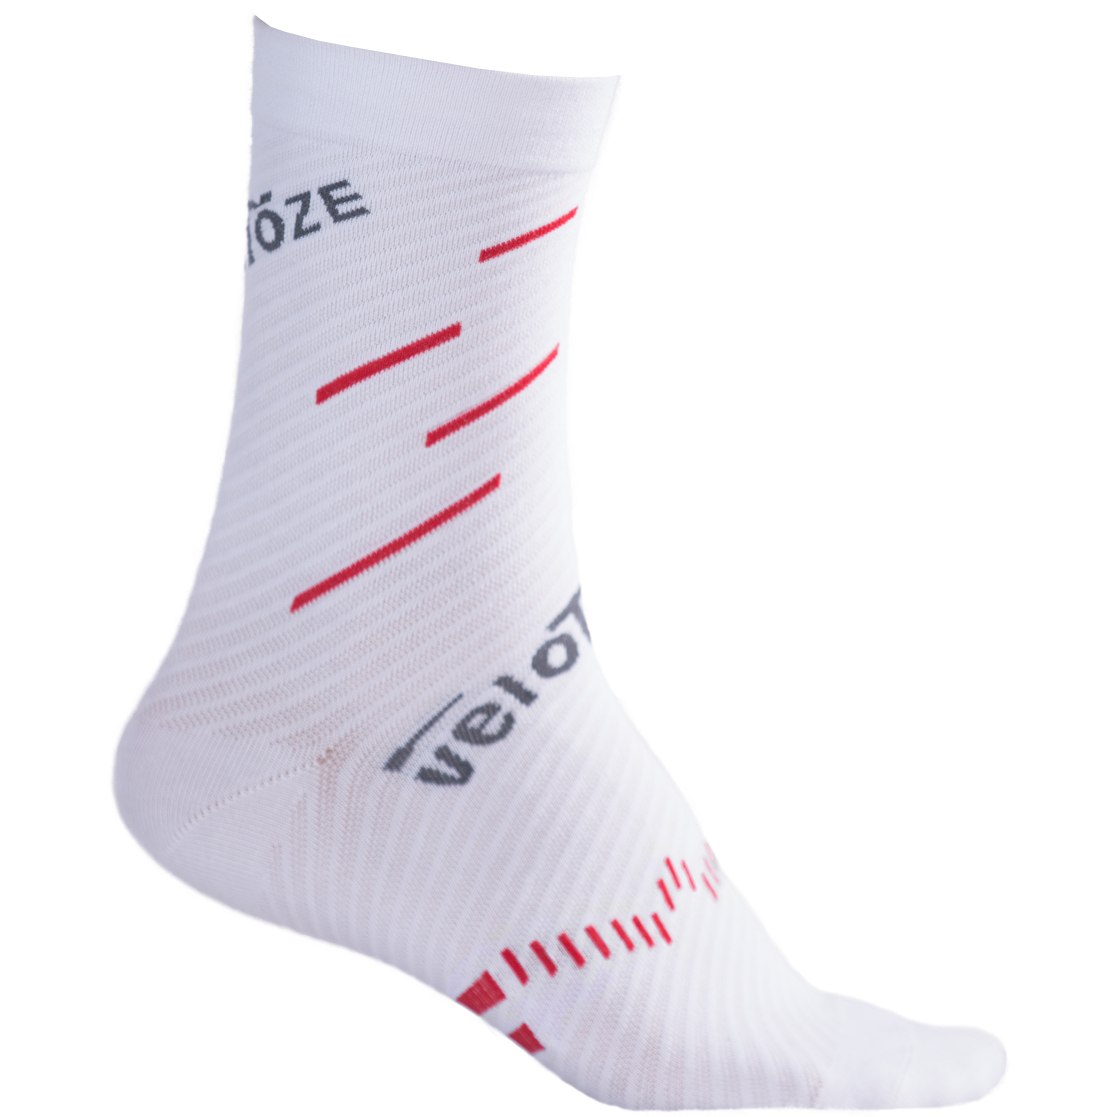 Productfoto van veloToze Coolmax Socks - White/Red